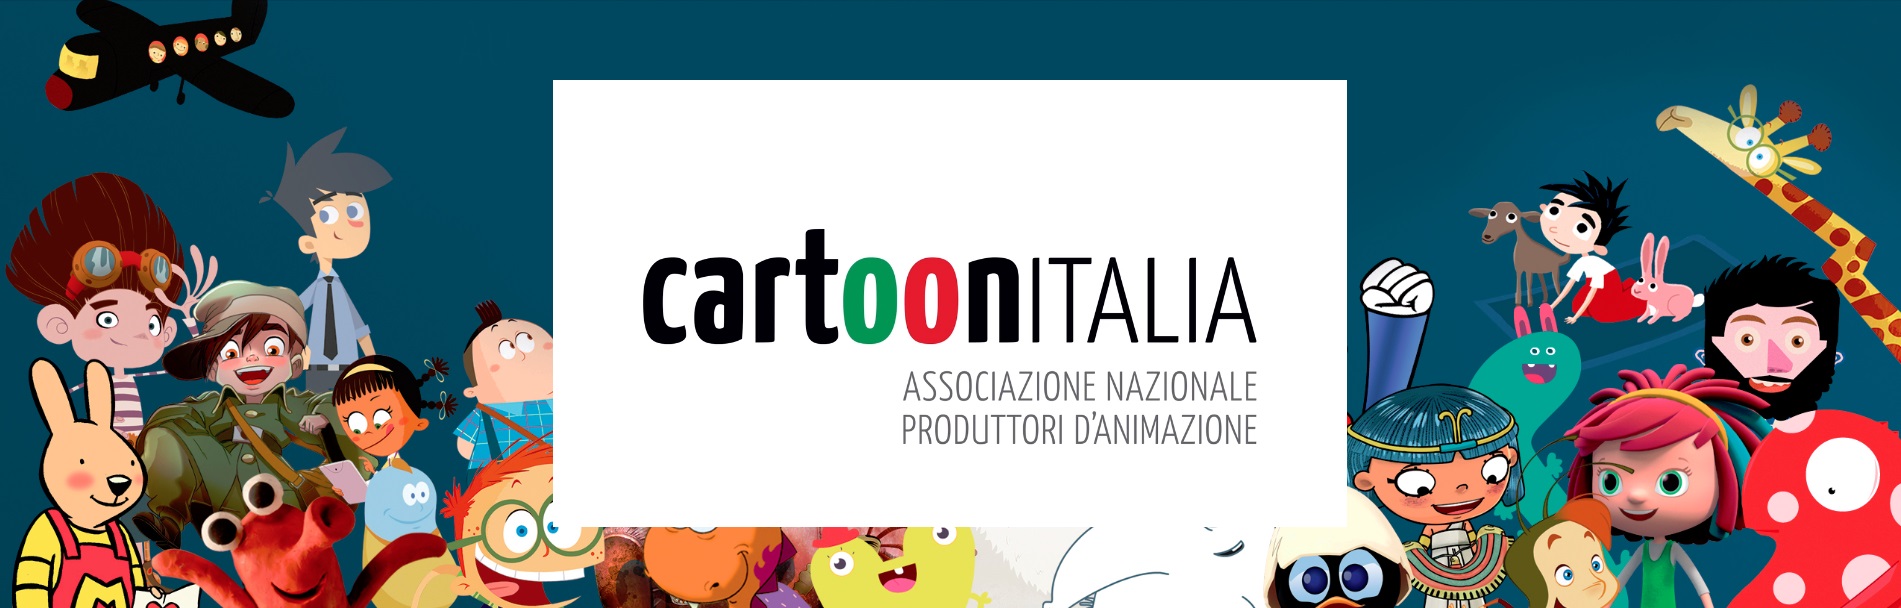 banner_cartoonitalia